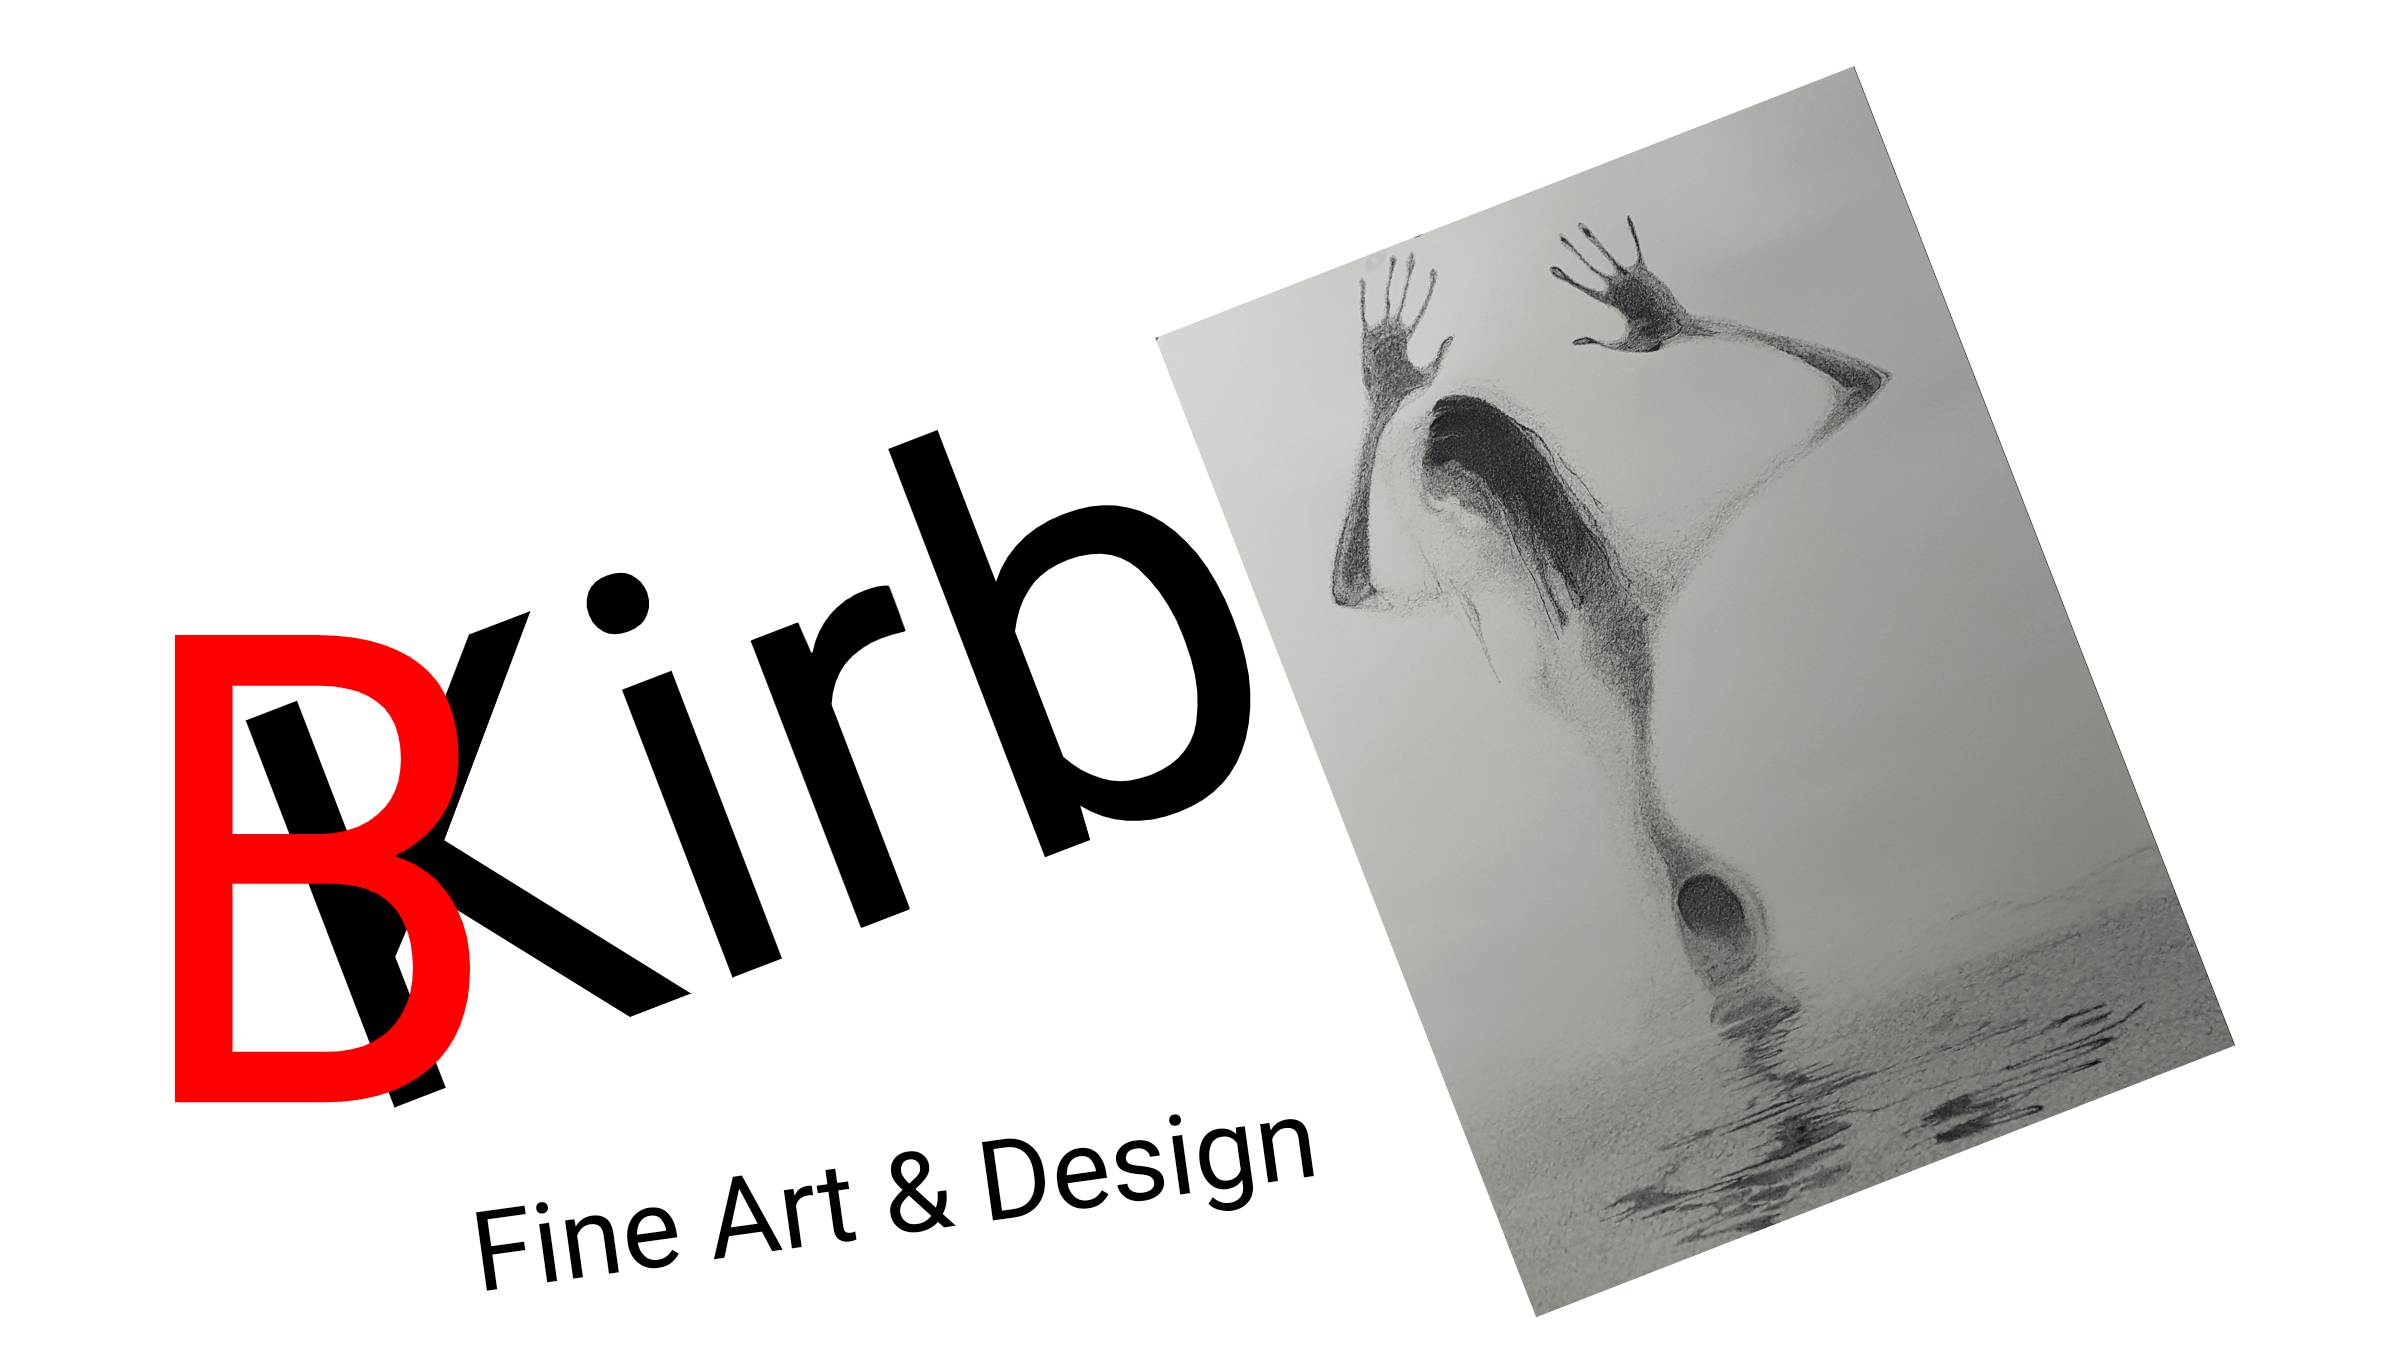 Bruce Kirby Fine Art & Design